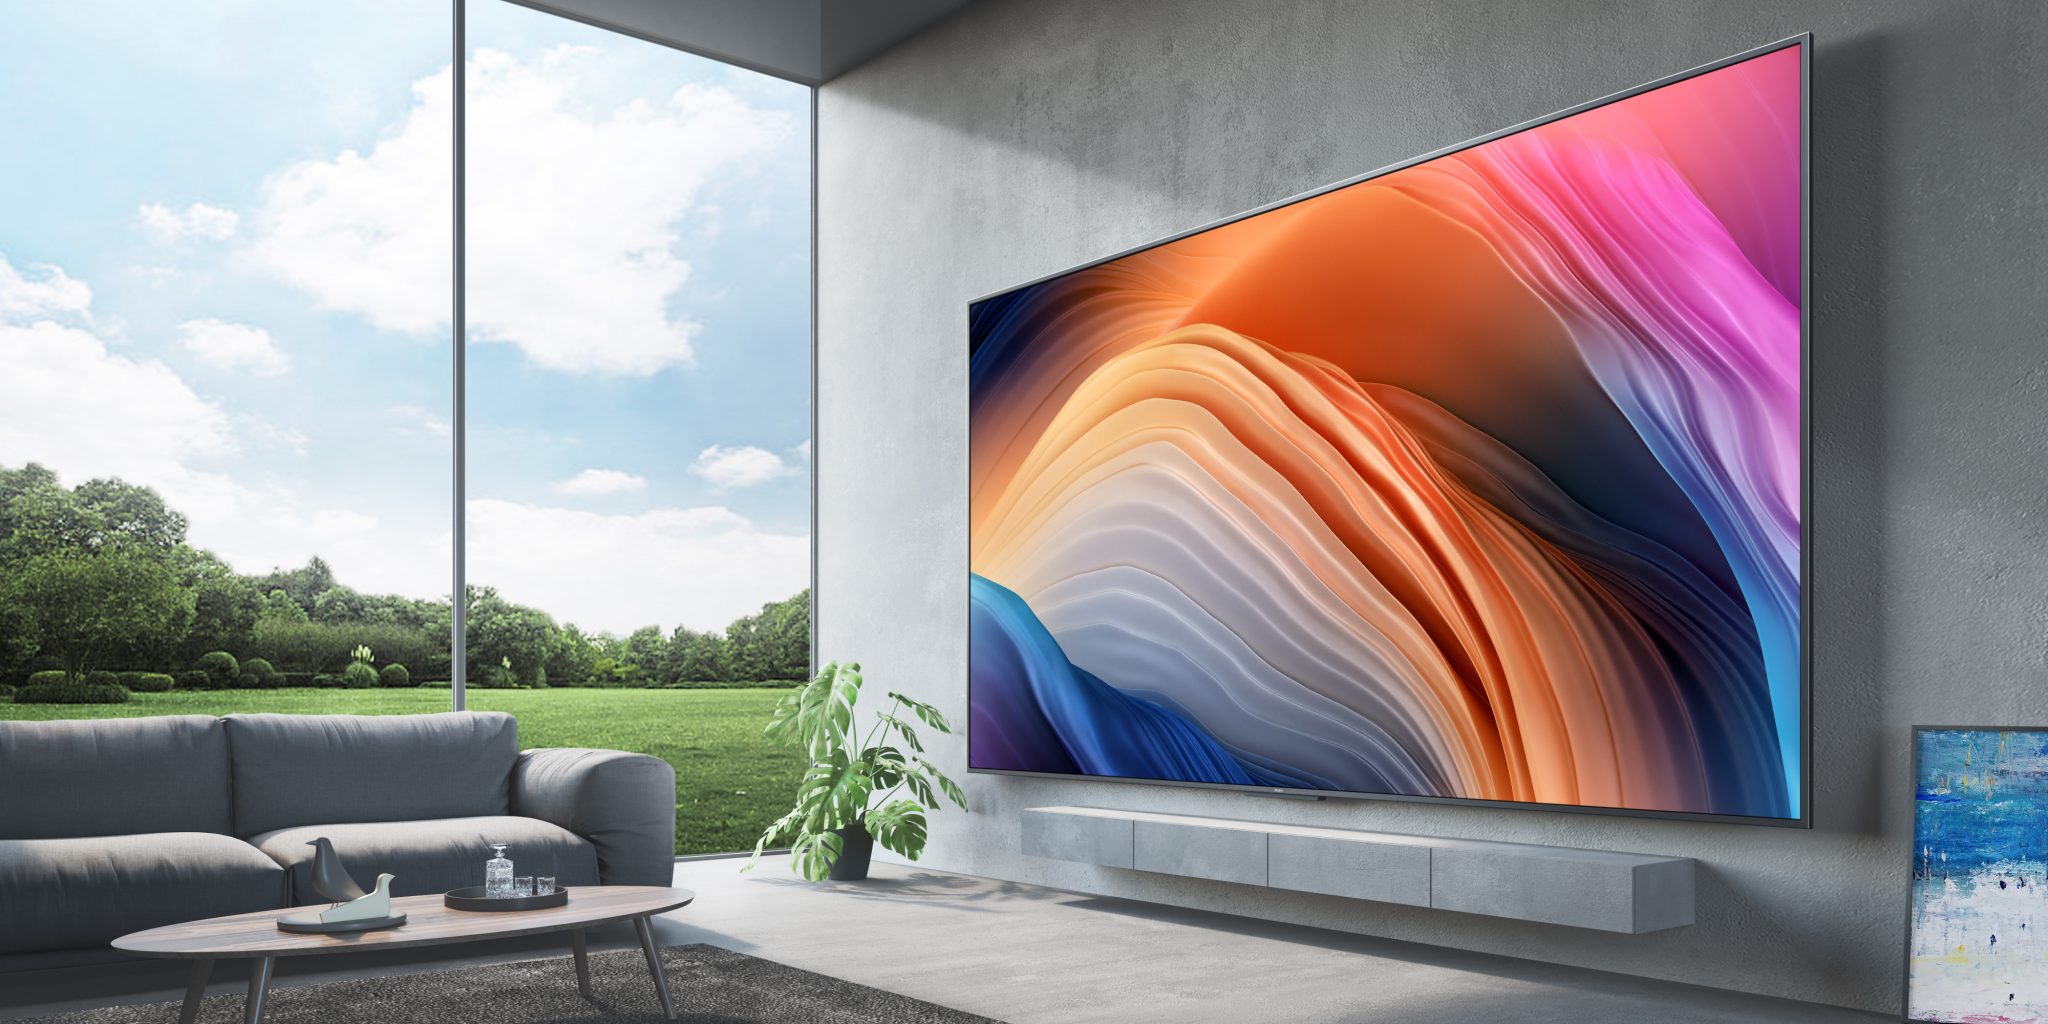 Redmi introduced a crazy 98-inch 4K smart TV. Its price has no ...